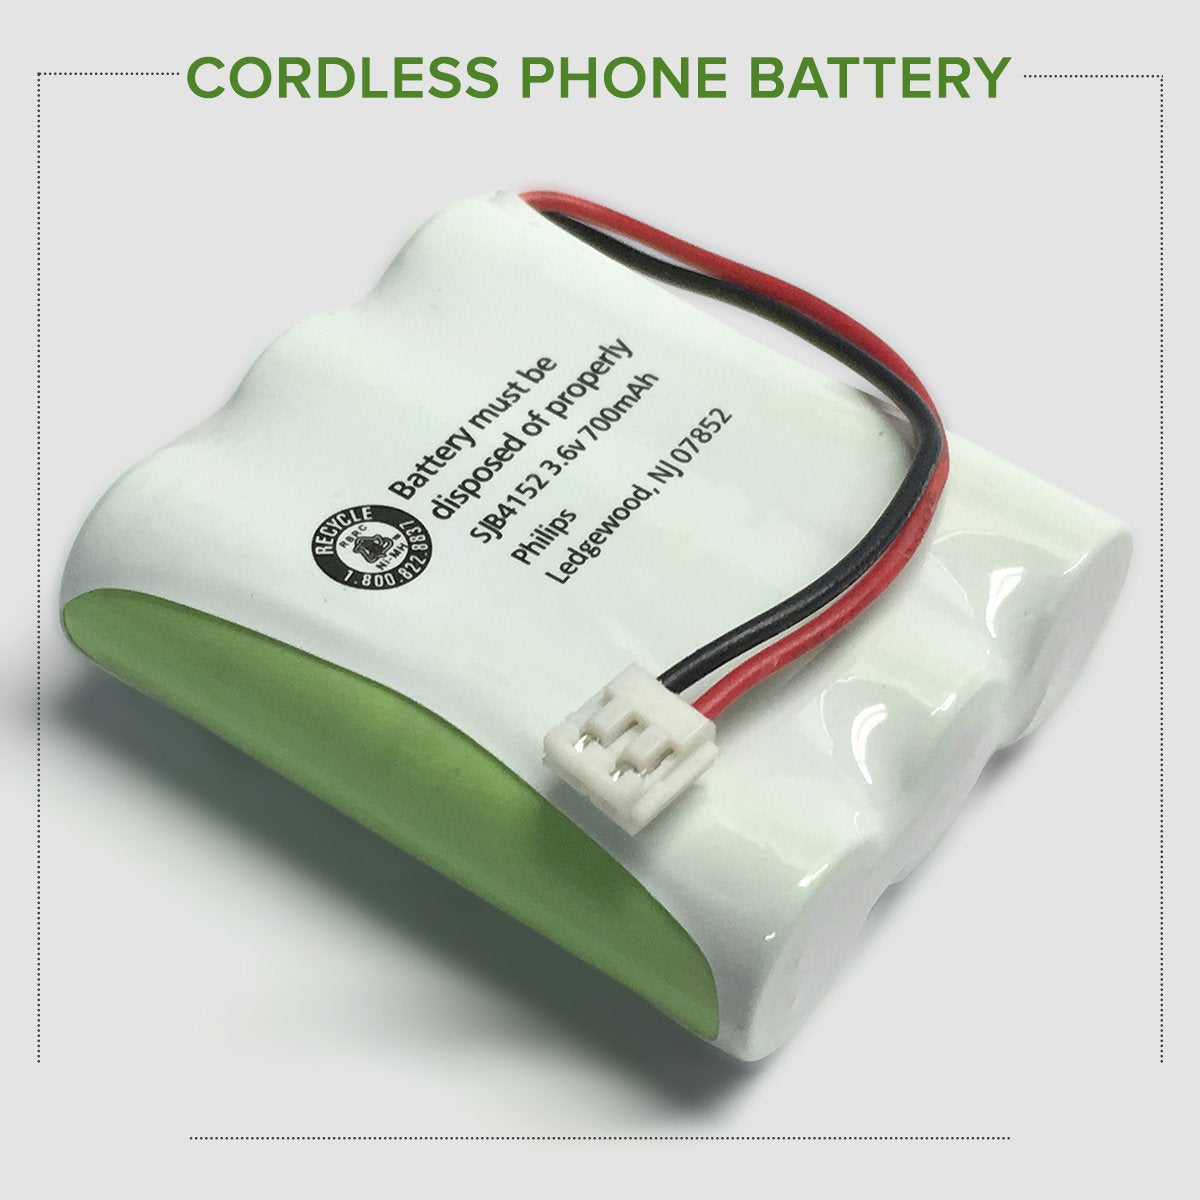 GE 2-7851 Cordless Phone Battery